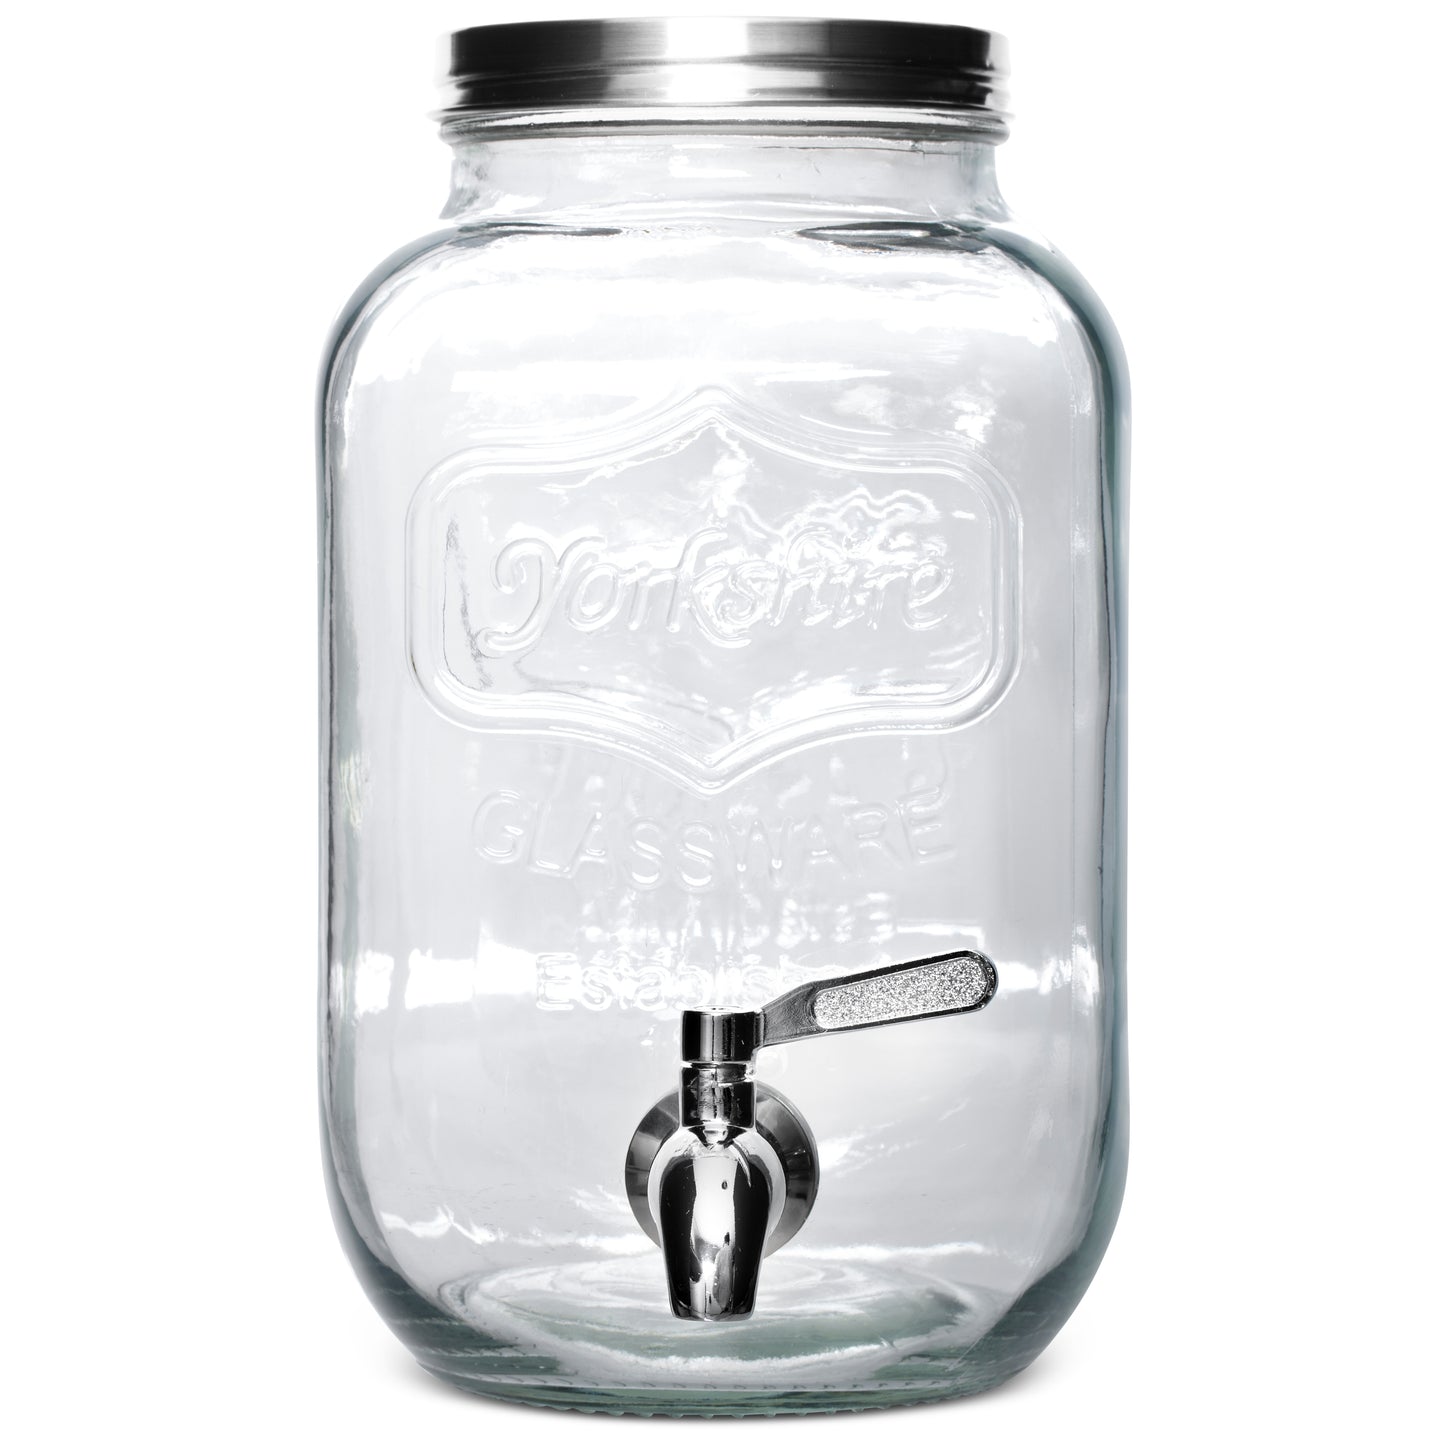 1 Gallon Glass Beverage Dispenser - Yorkshire